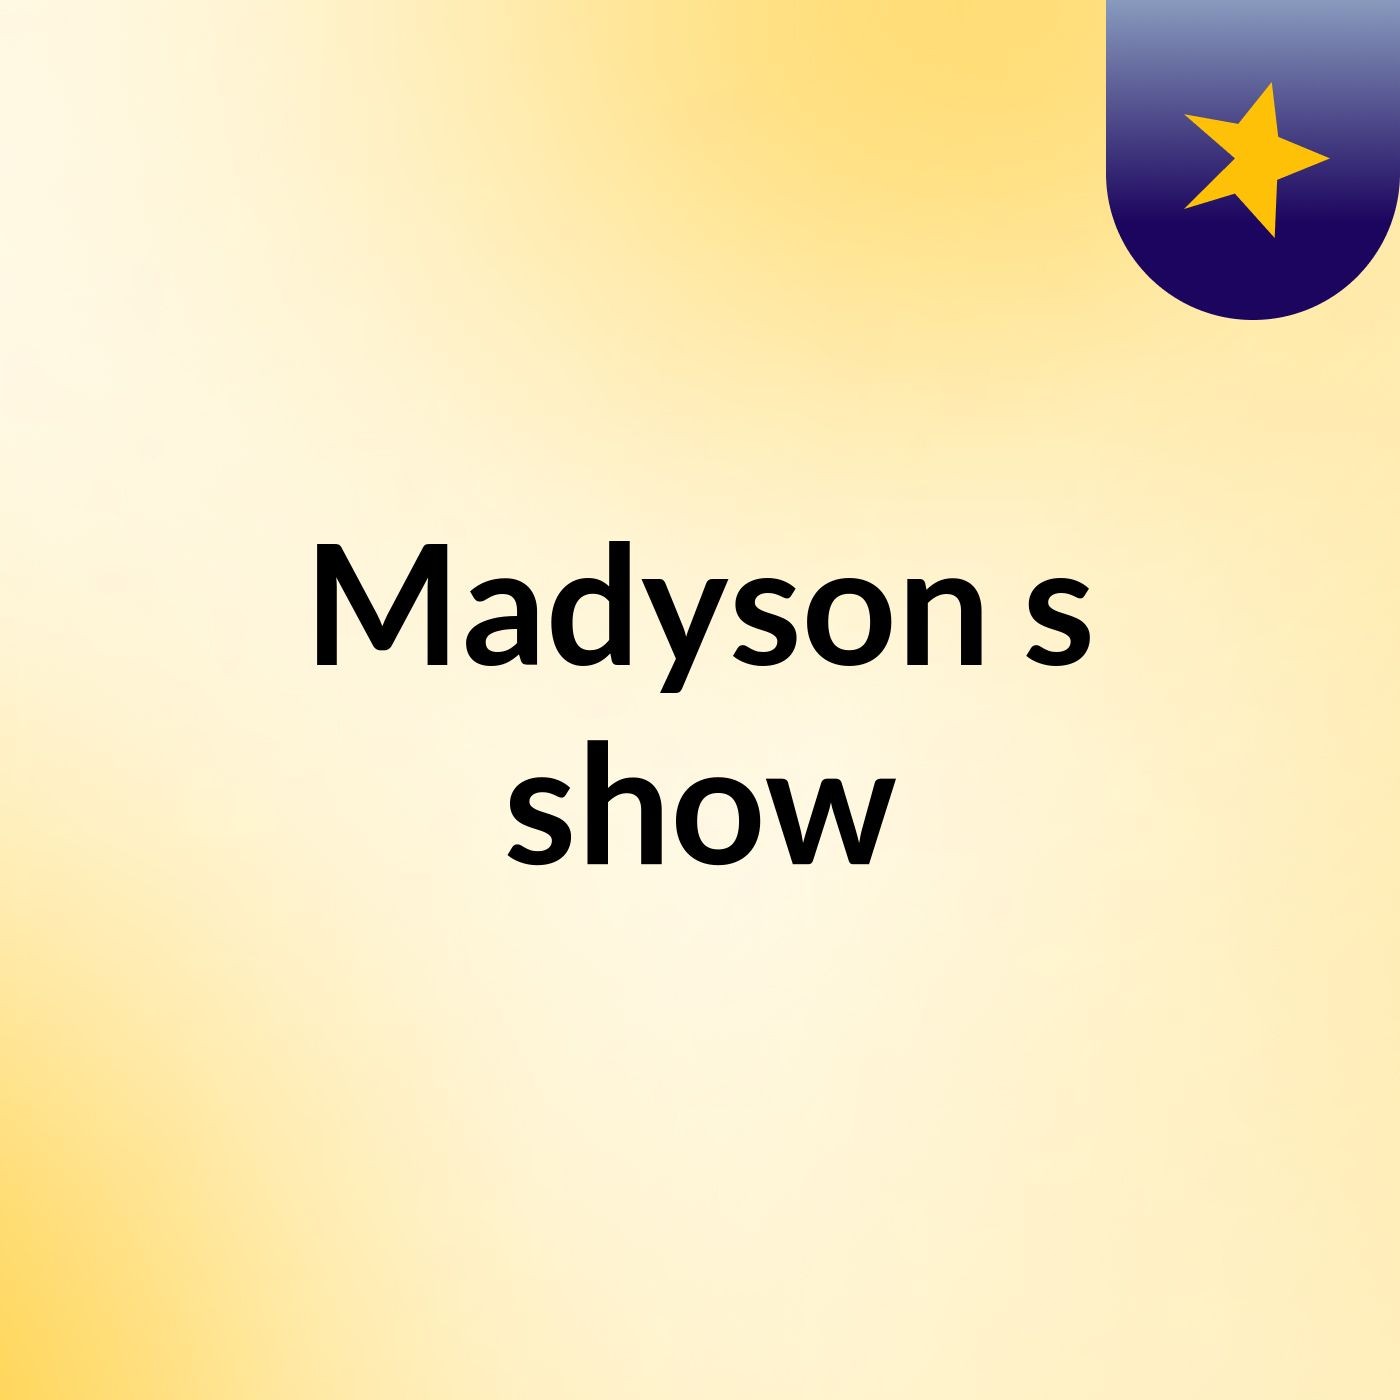 Madyson's show